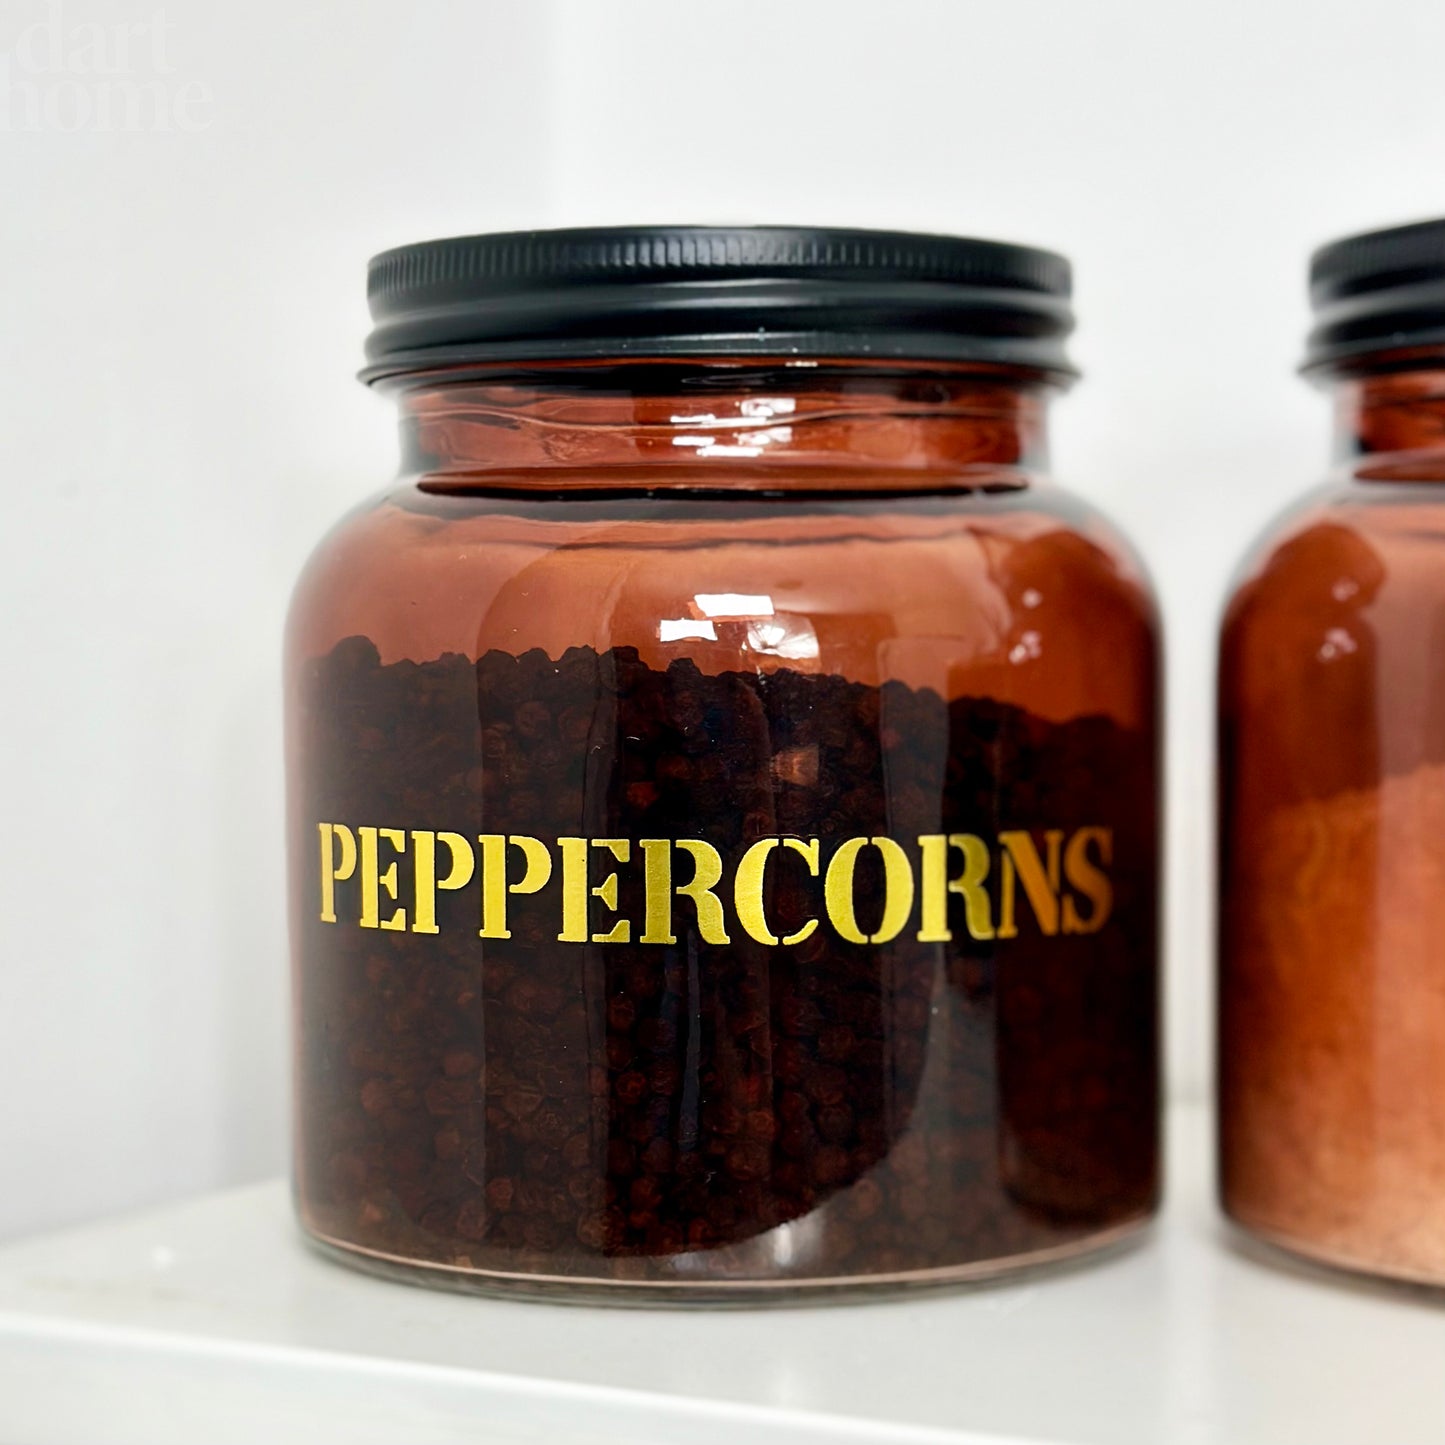 Amber Salt And Peppercorn Jars